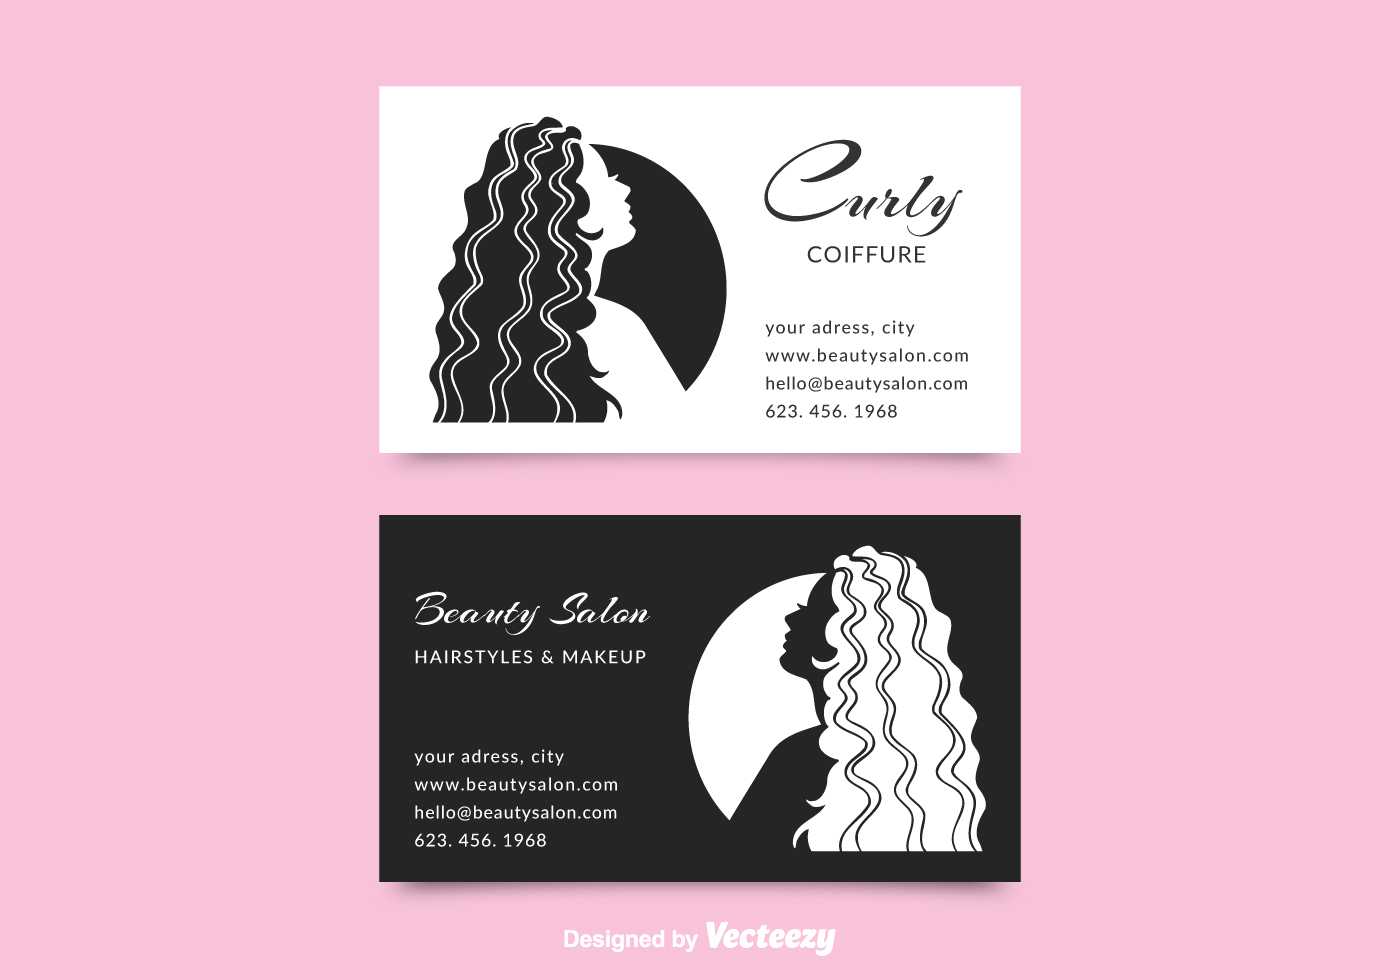 Beauty Salon Business Card Free Vector Art – (37 Free Downloads) With Regard To Hair Salon Business Card Template